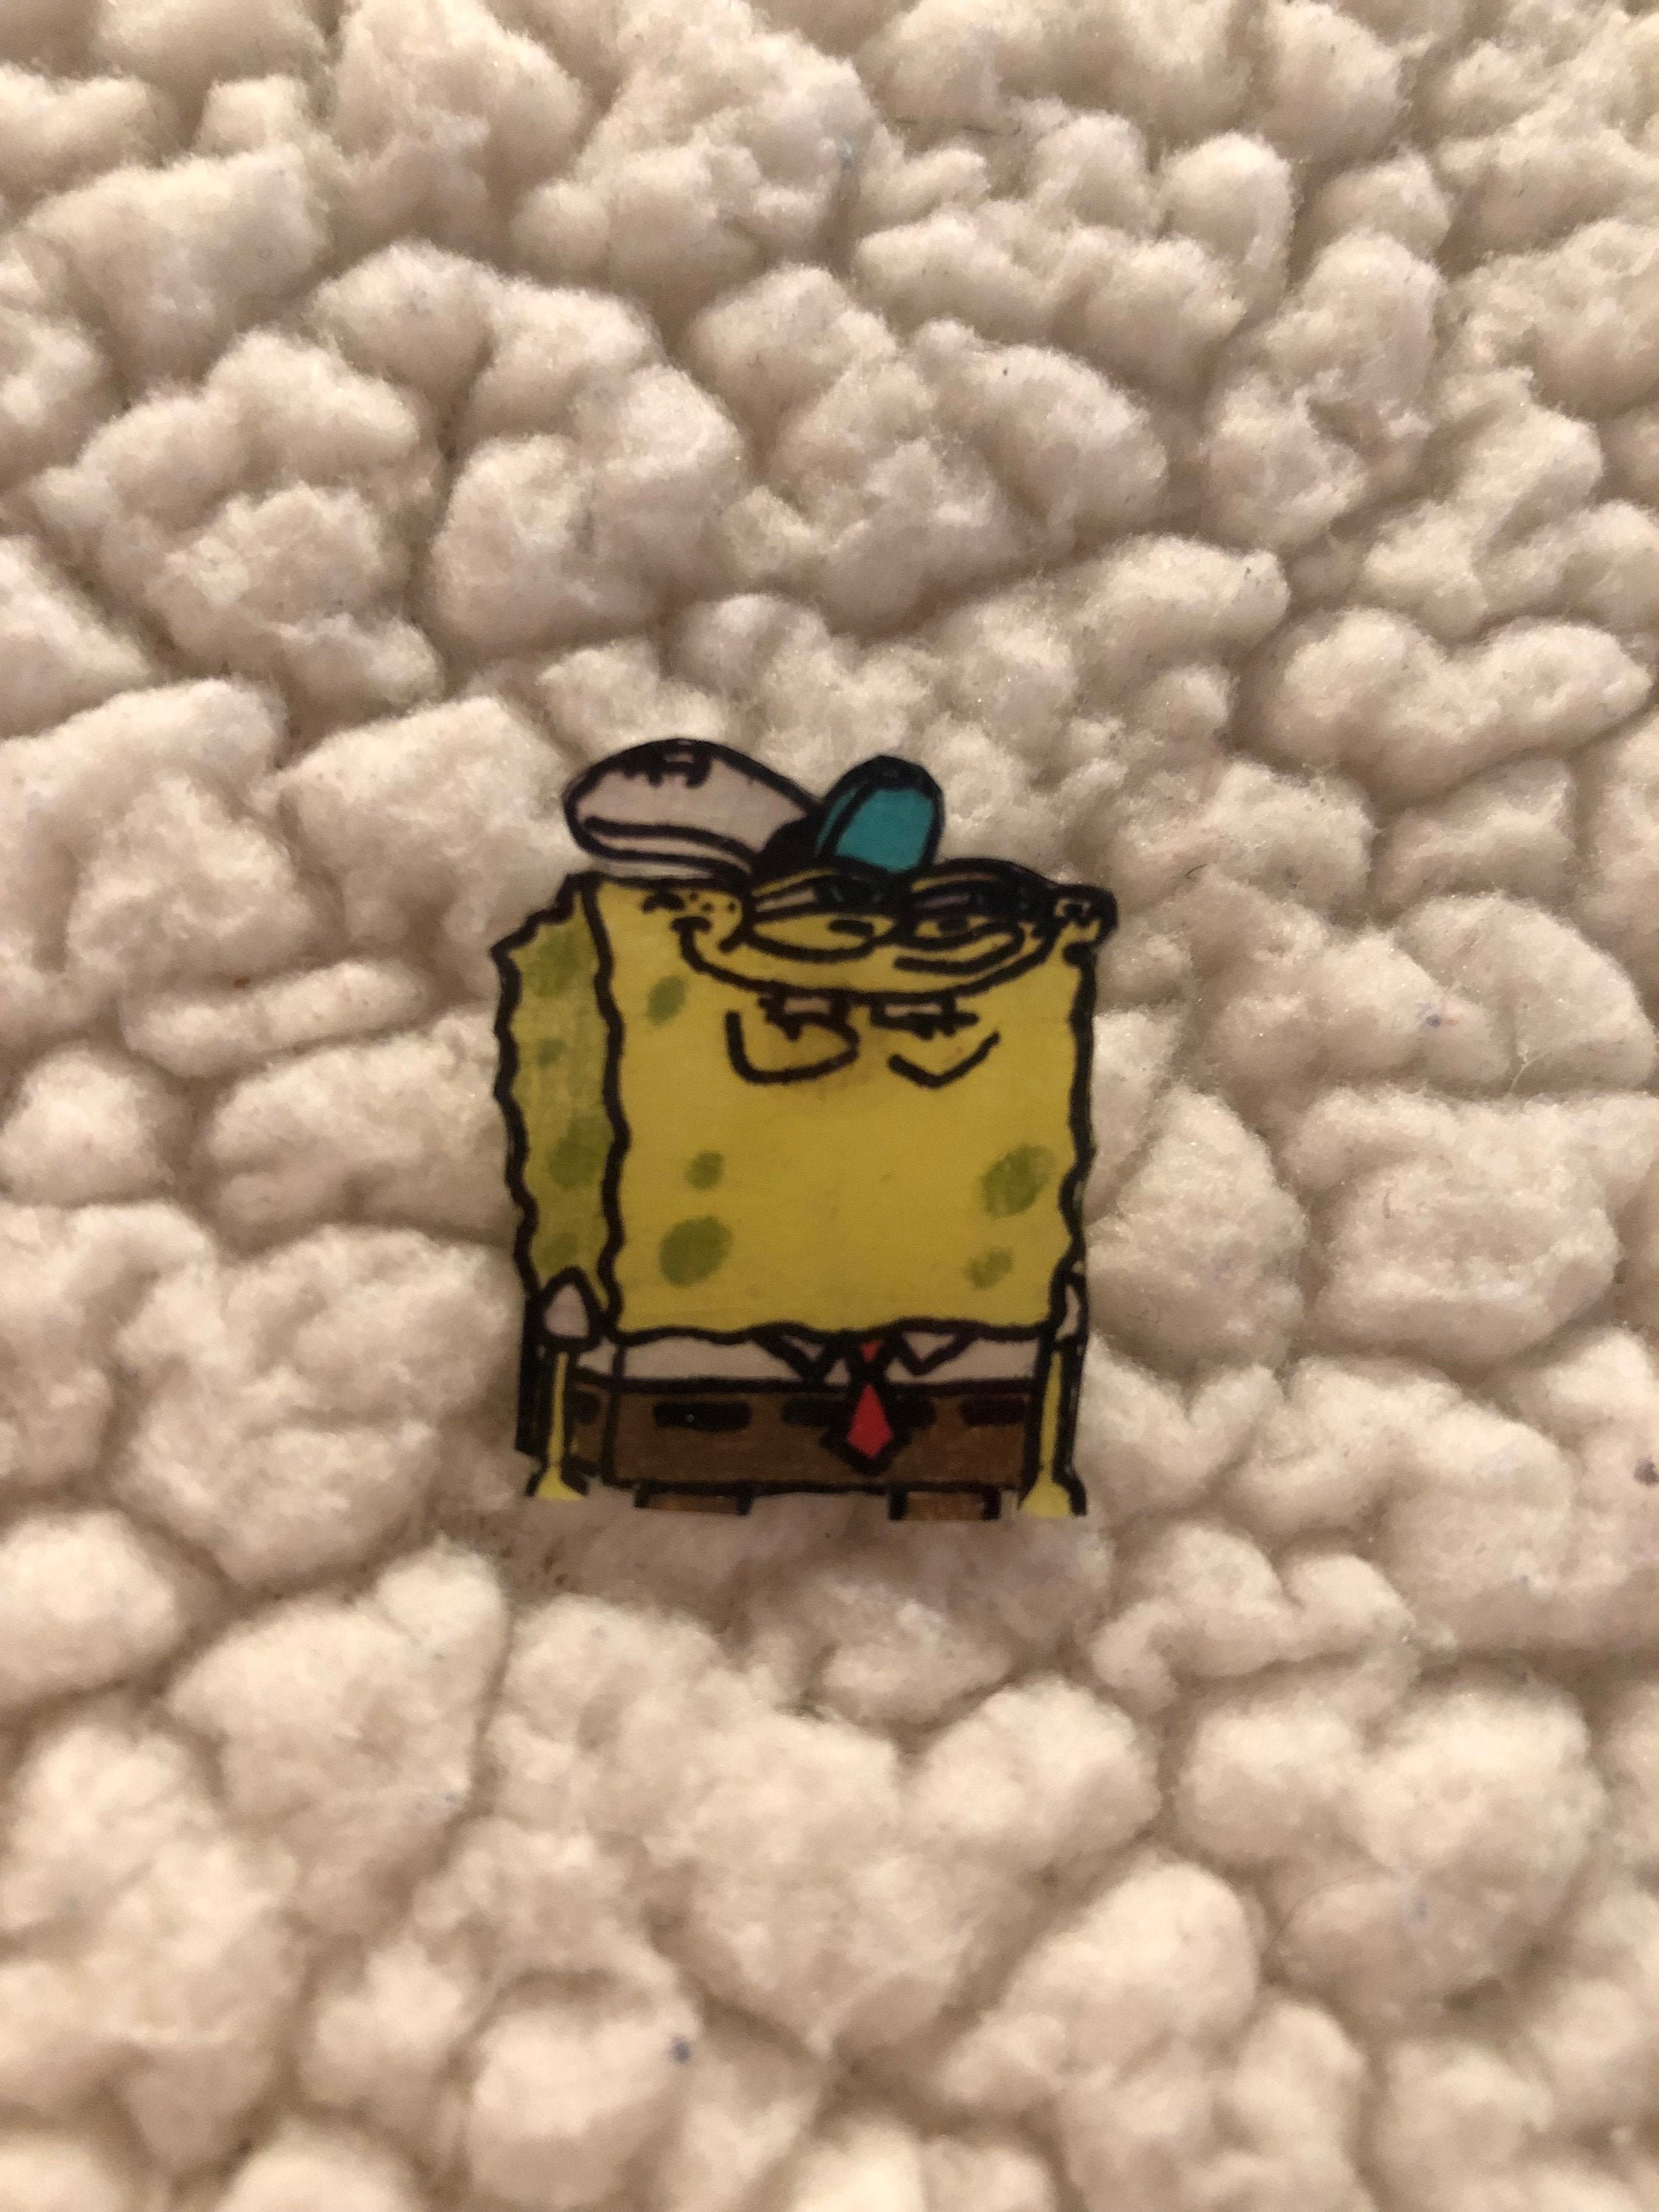 Spongebob Squarepants Moment Quote PinKeychainPhone Charm Handmade Custom Cartoon Nickelodeon Squidward's Talent